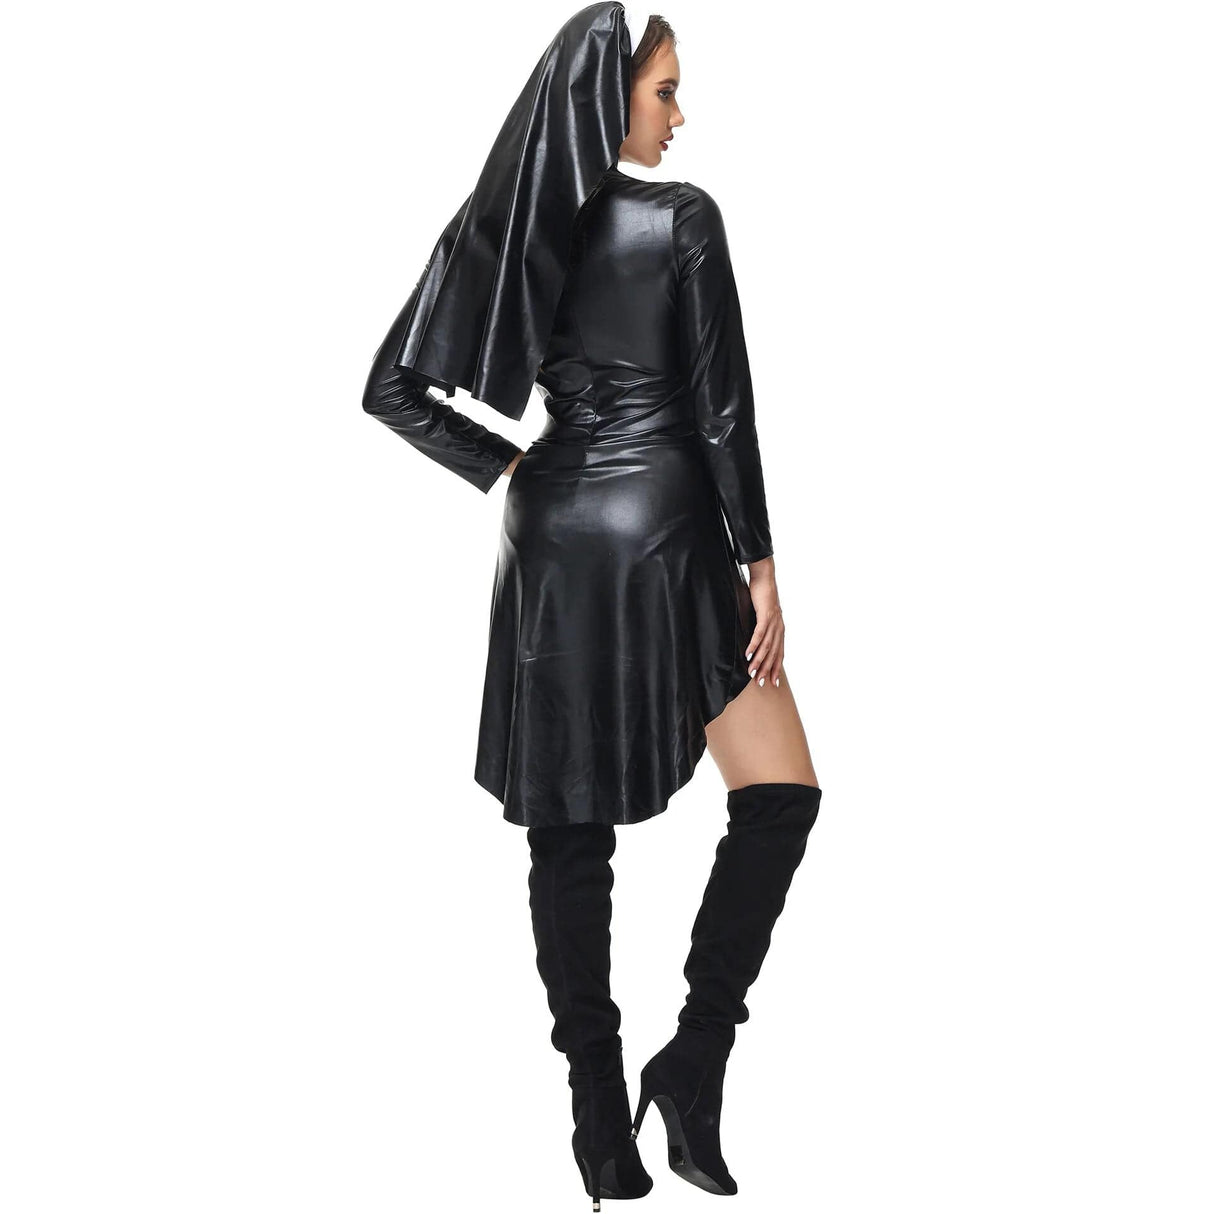 Alia Nun Sister Outfit